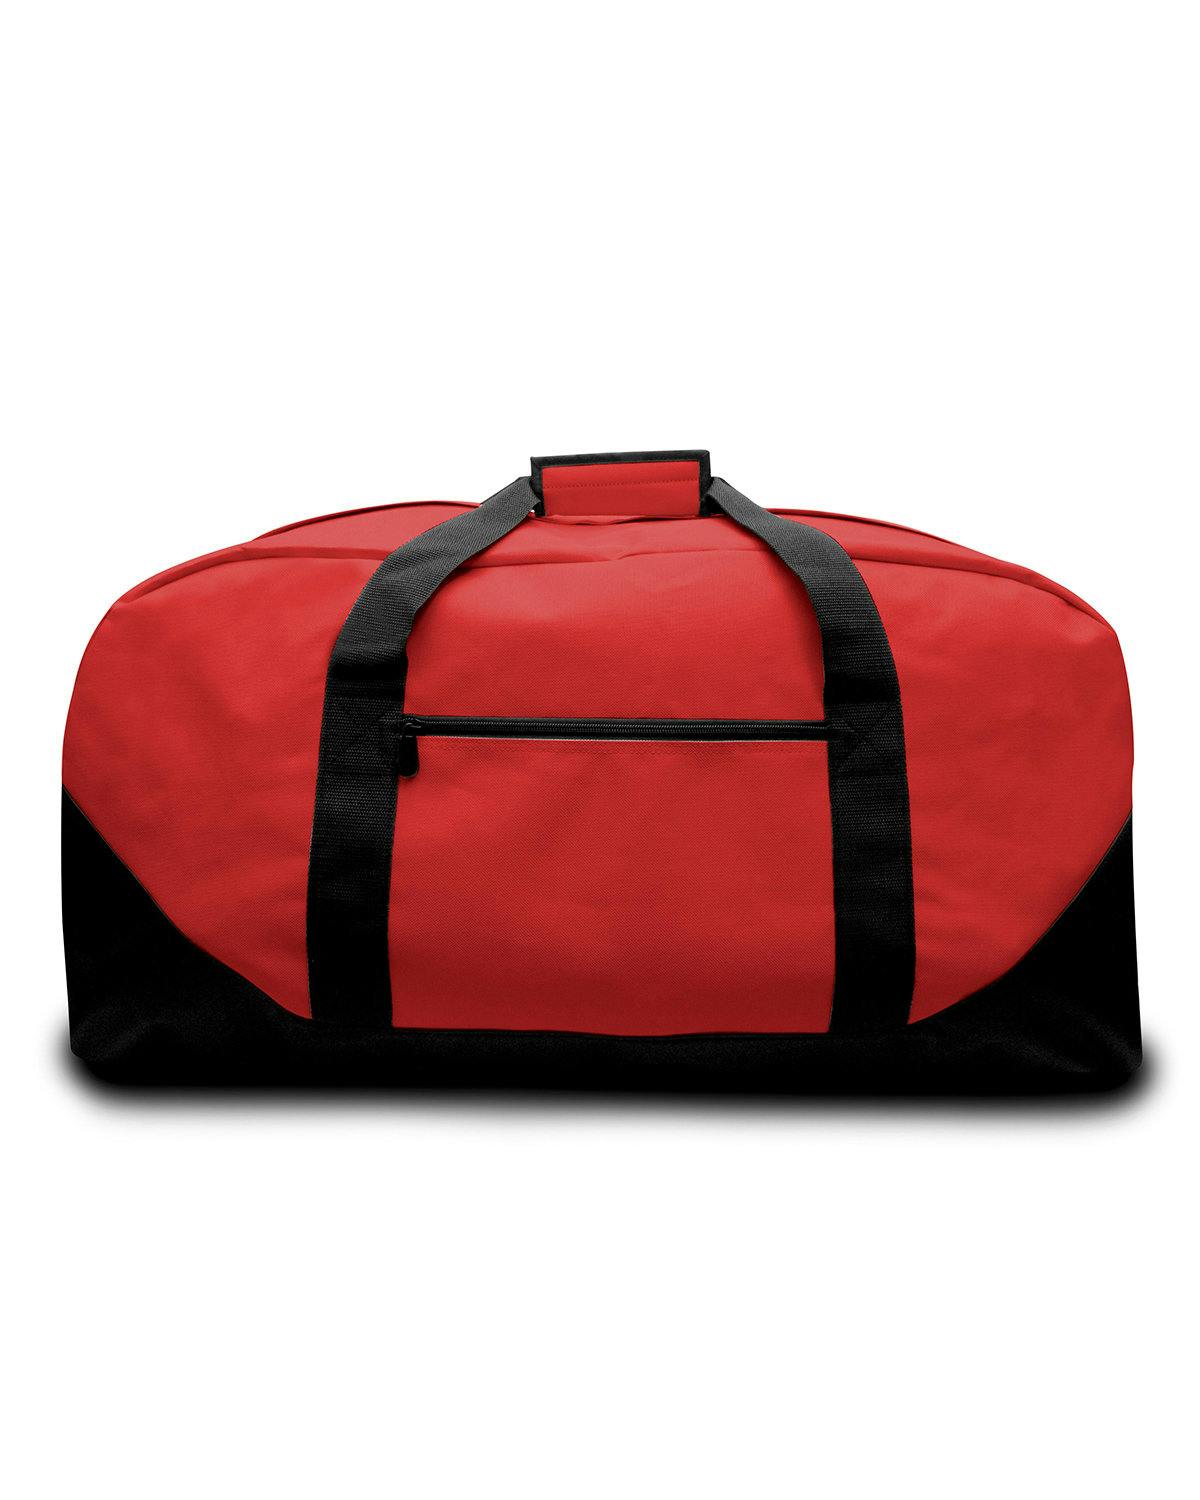 Image for Liberty Bag Series Large Duffle